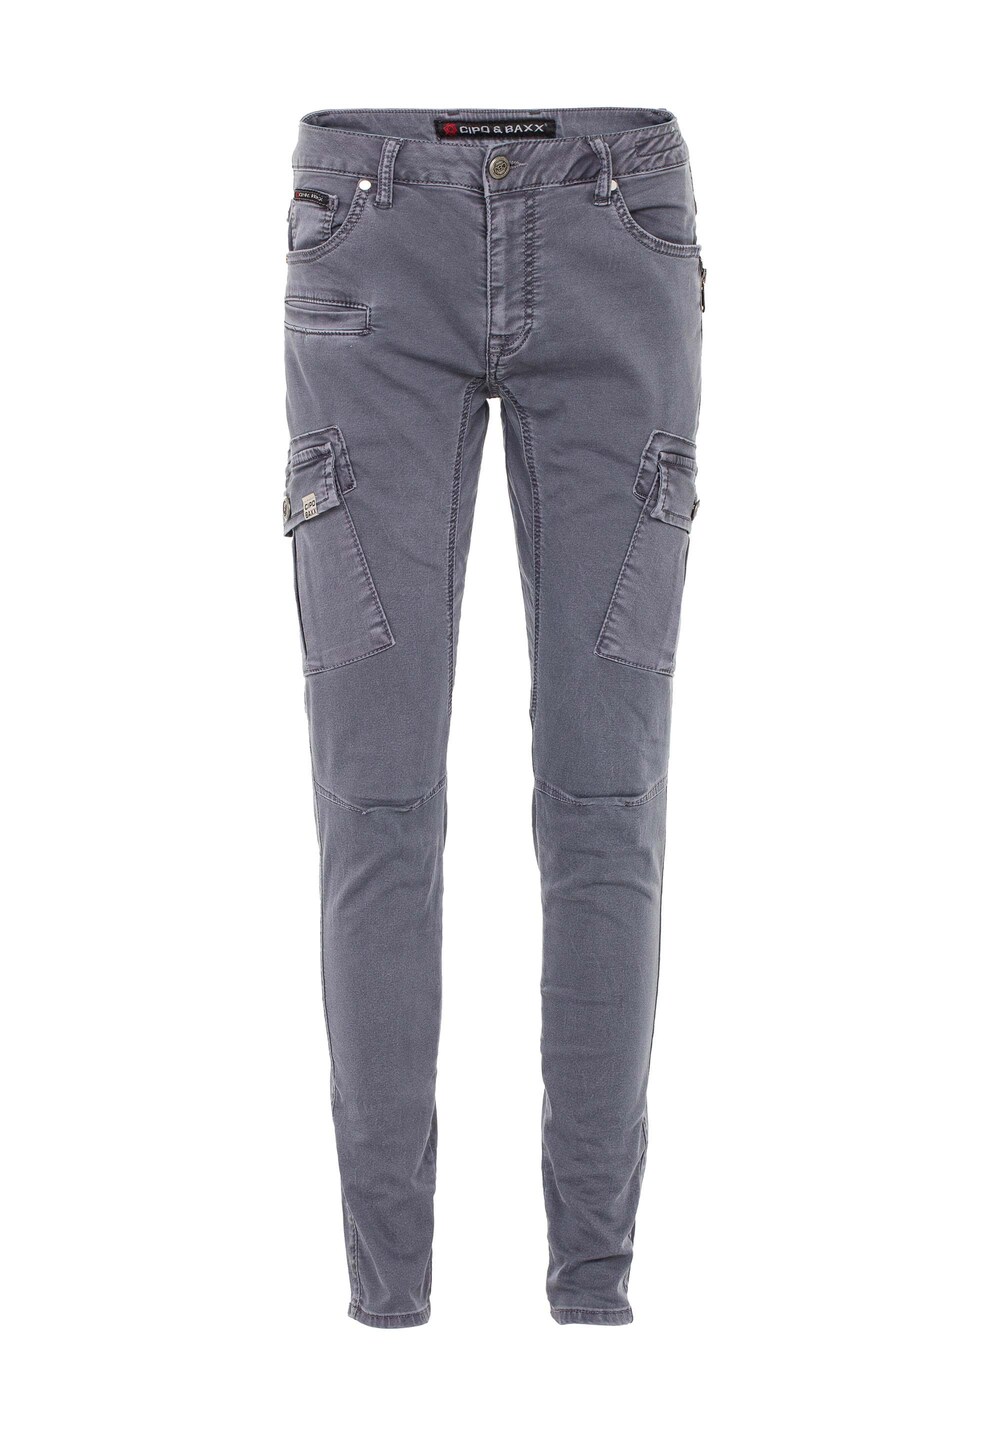 Обычные джинсы-карго Cipo & Baxx Akin, серый akin